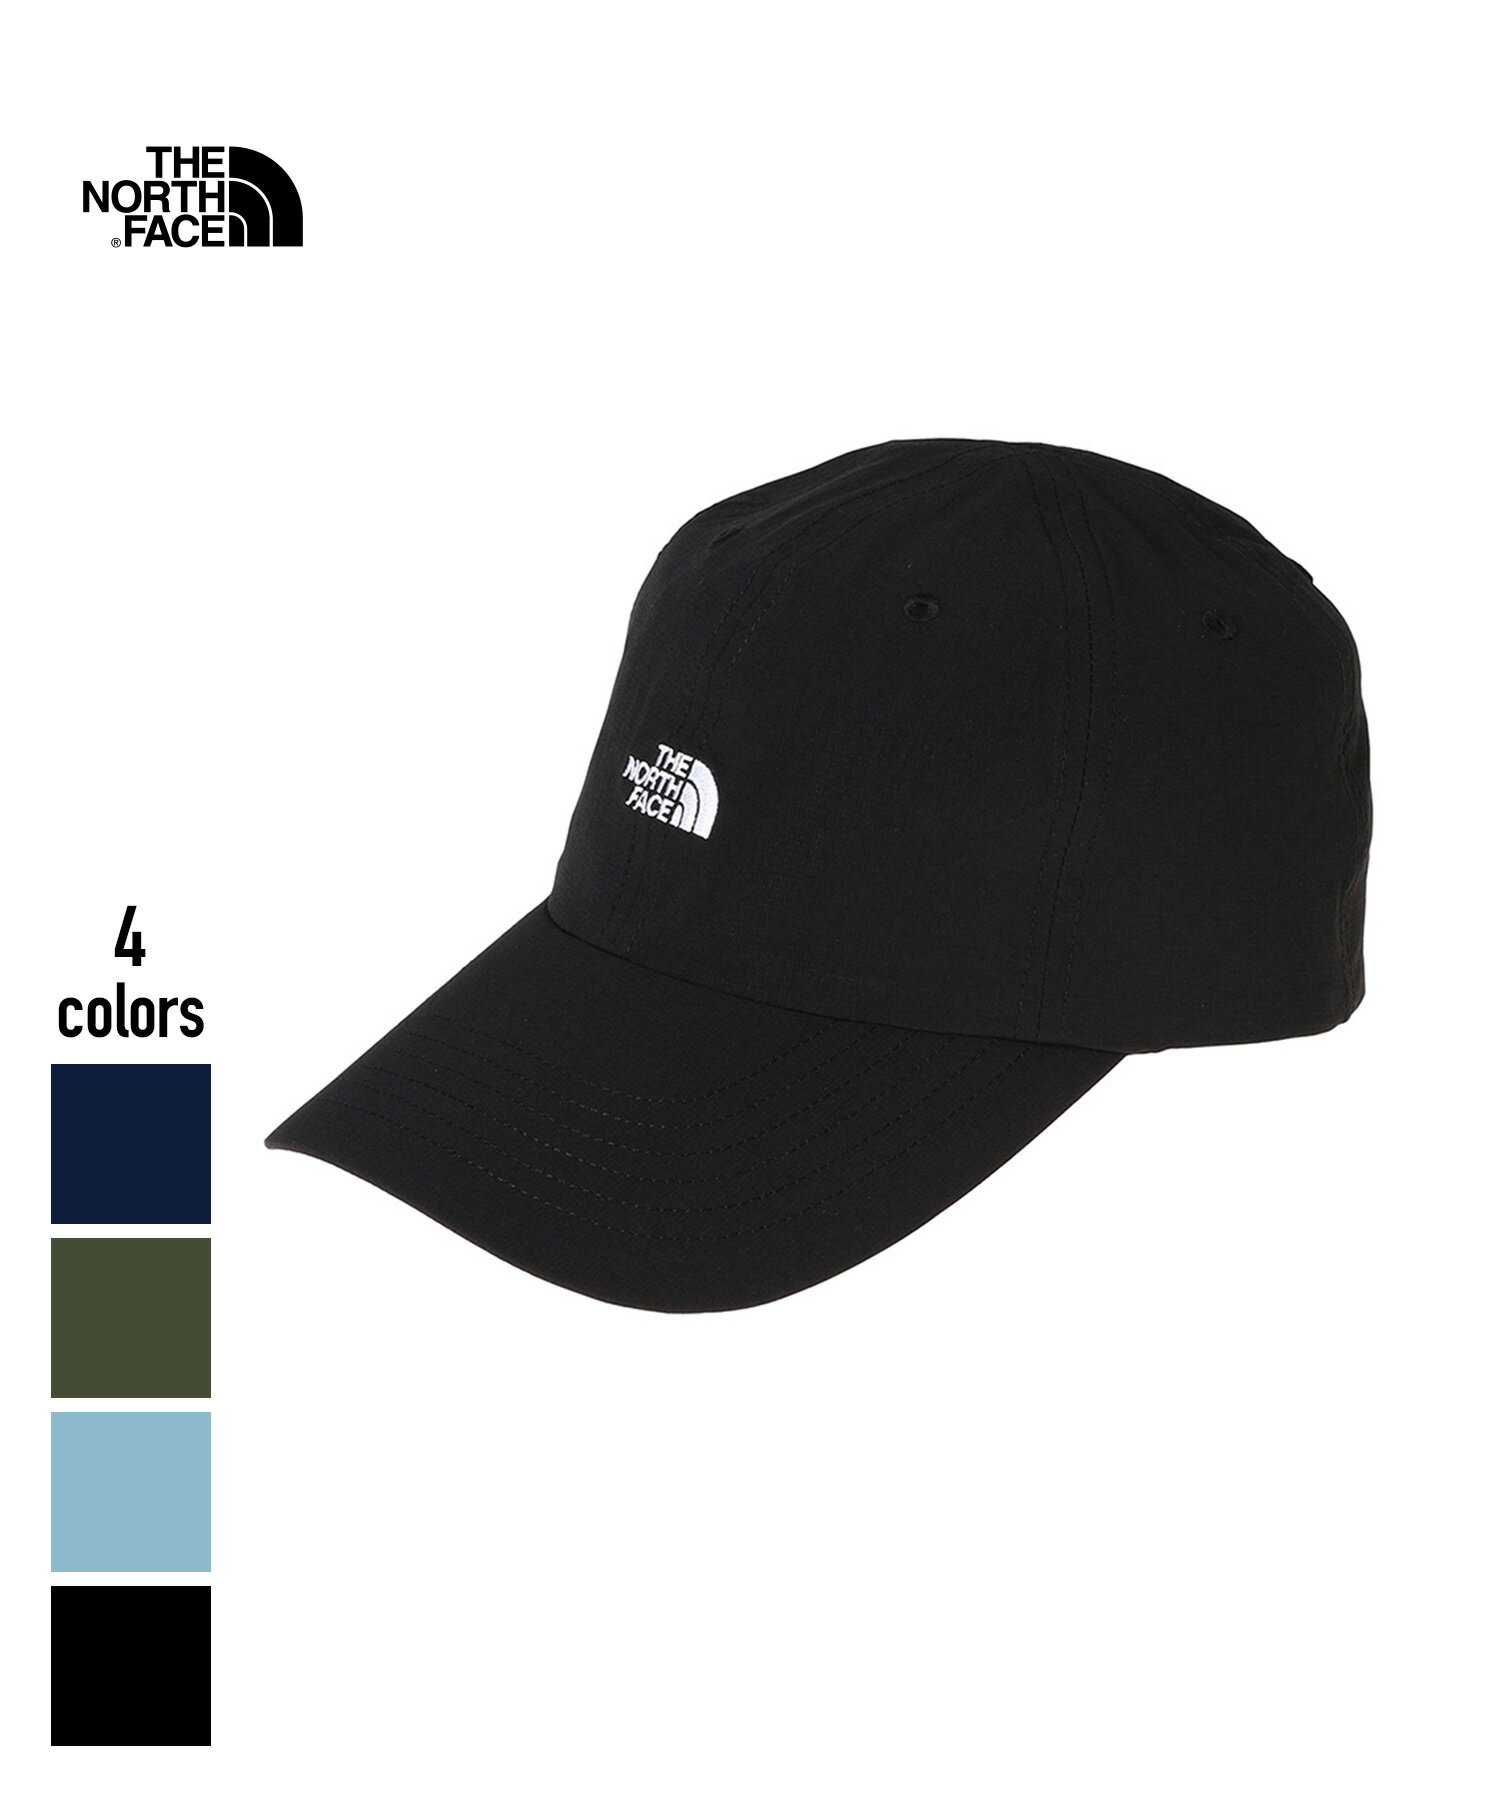 THE NORTH FACE Active Light Cap(NN02378)国内正規品 メンズ 帽子 ヘッドウェア カジュアル ストリート スポーティー シンプル ブラック/ネイビー/ブルー/オリーブ M/L